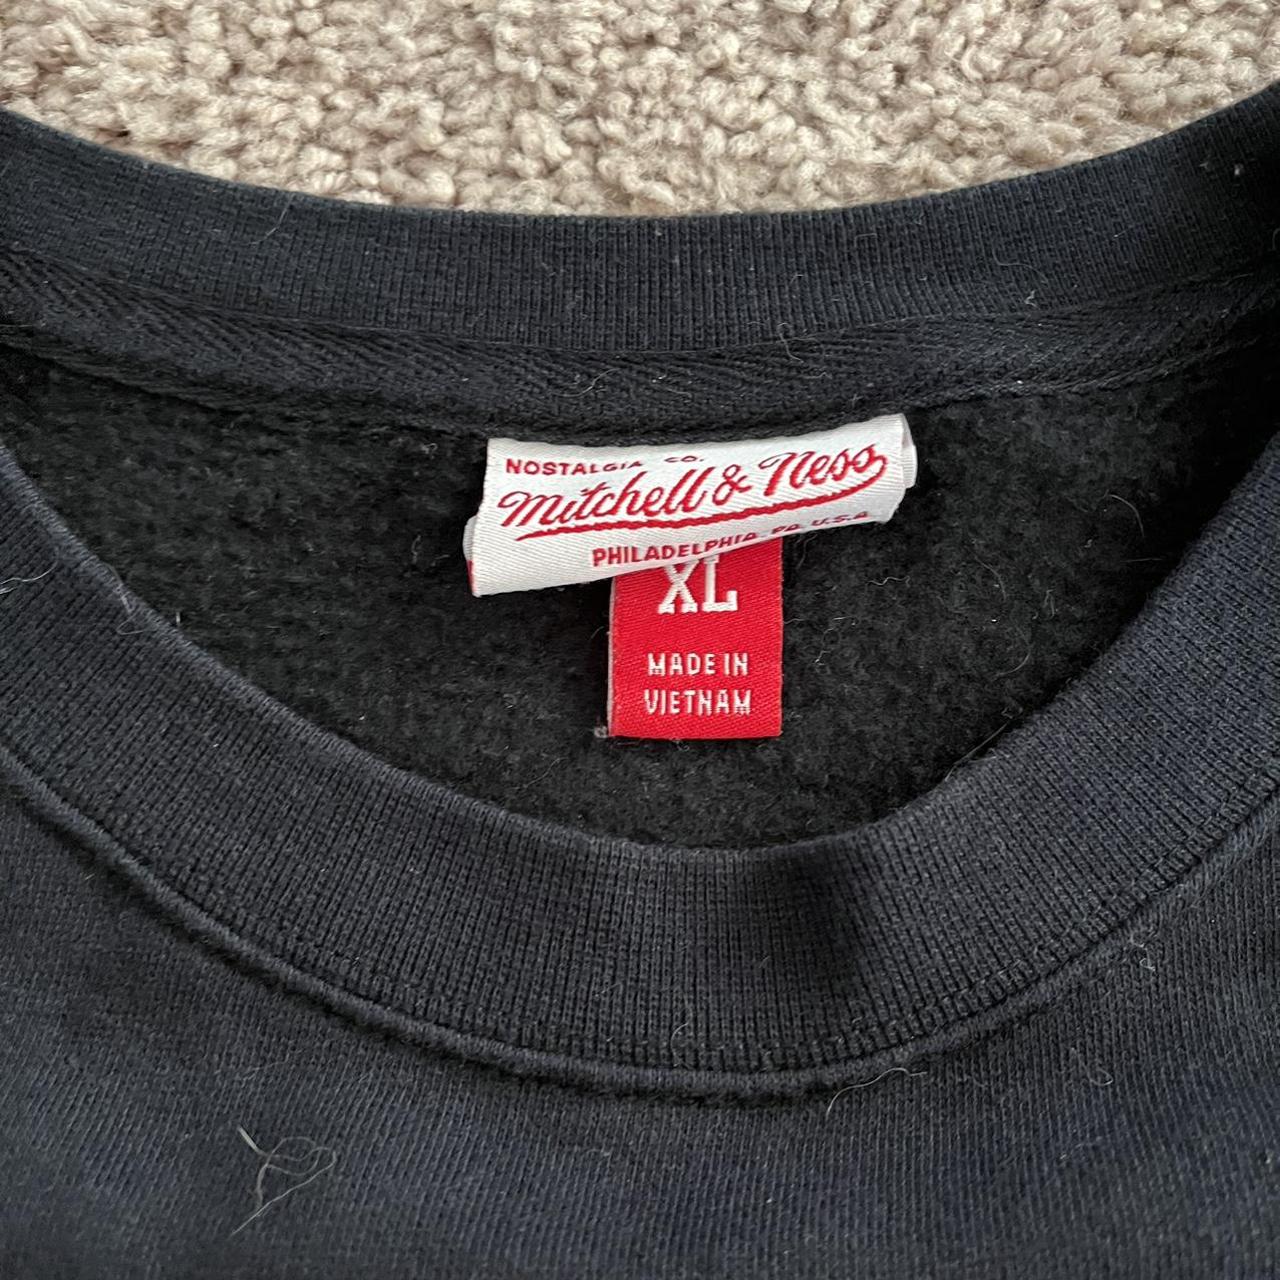 Mitchell & Ness Men's Sweatshirt - Black - XL